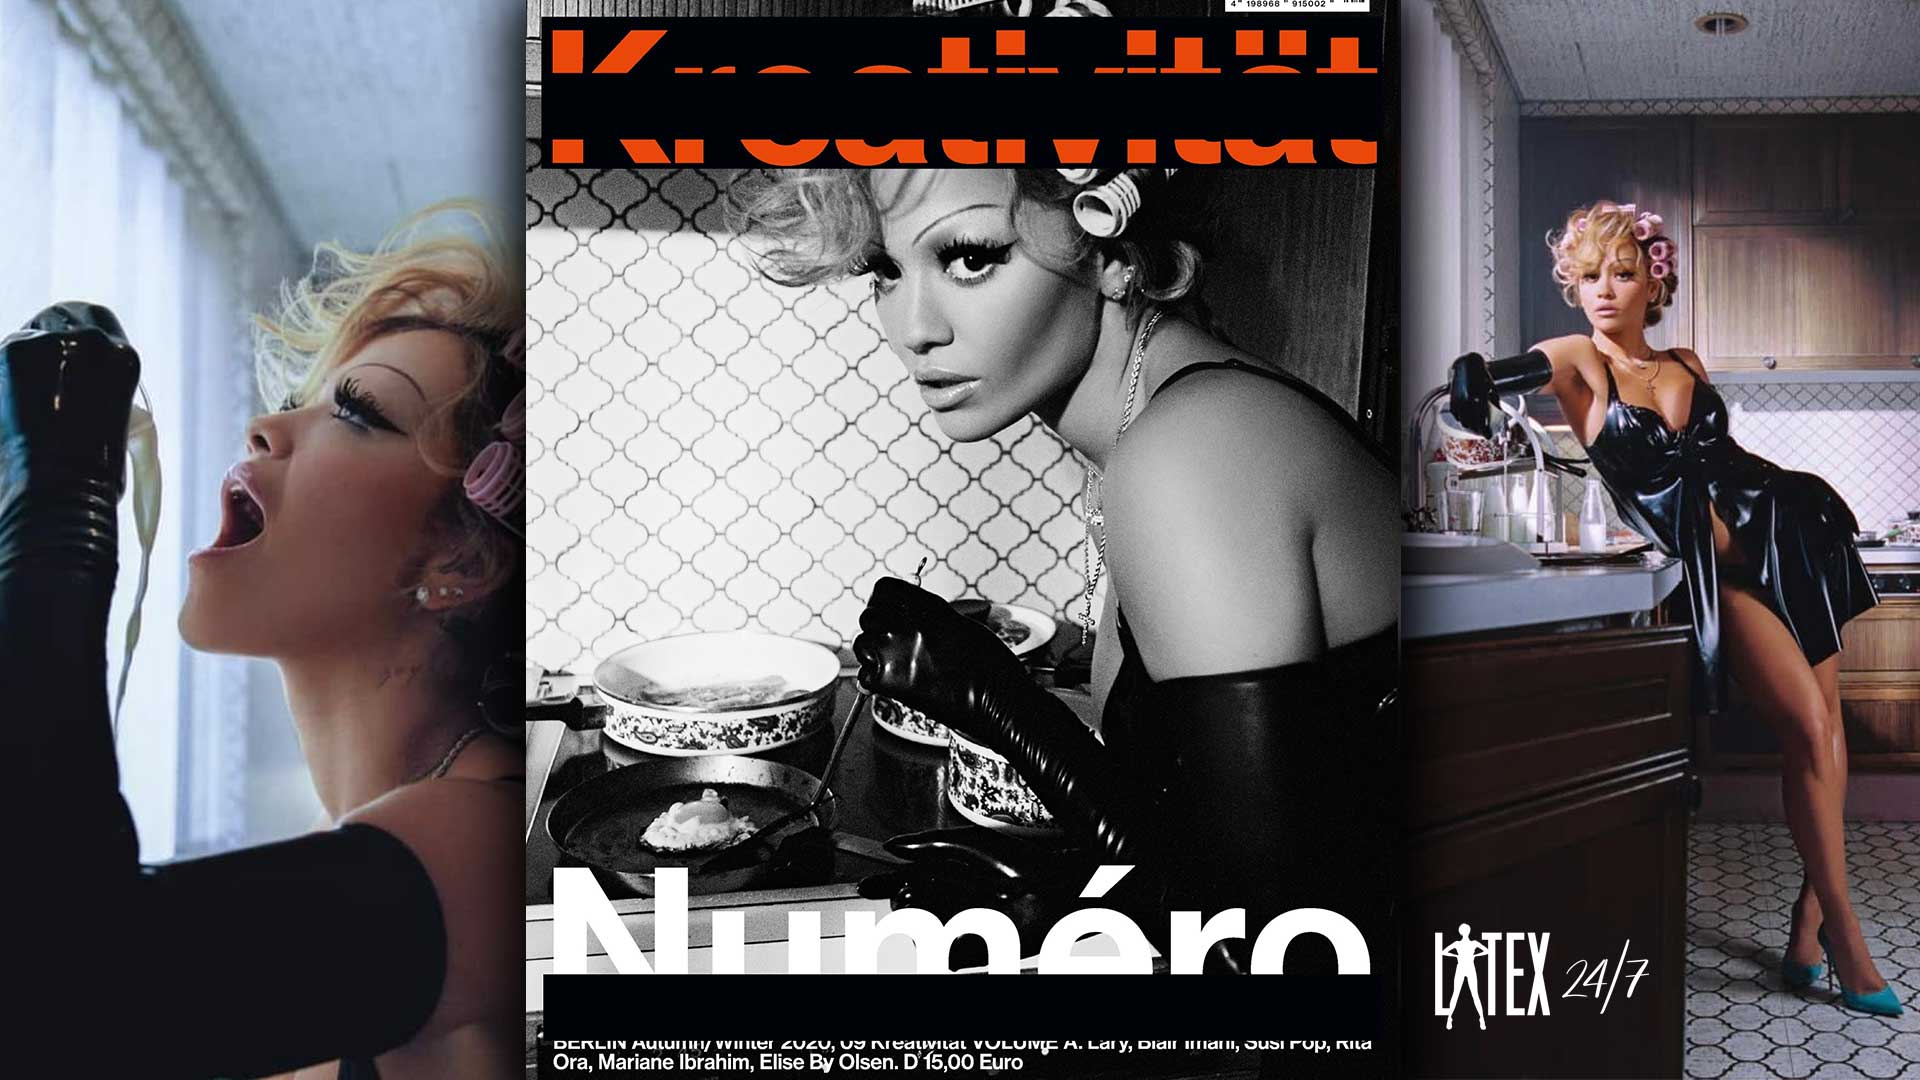 Rita Ora Poster Wallpapers